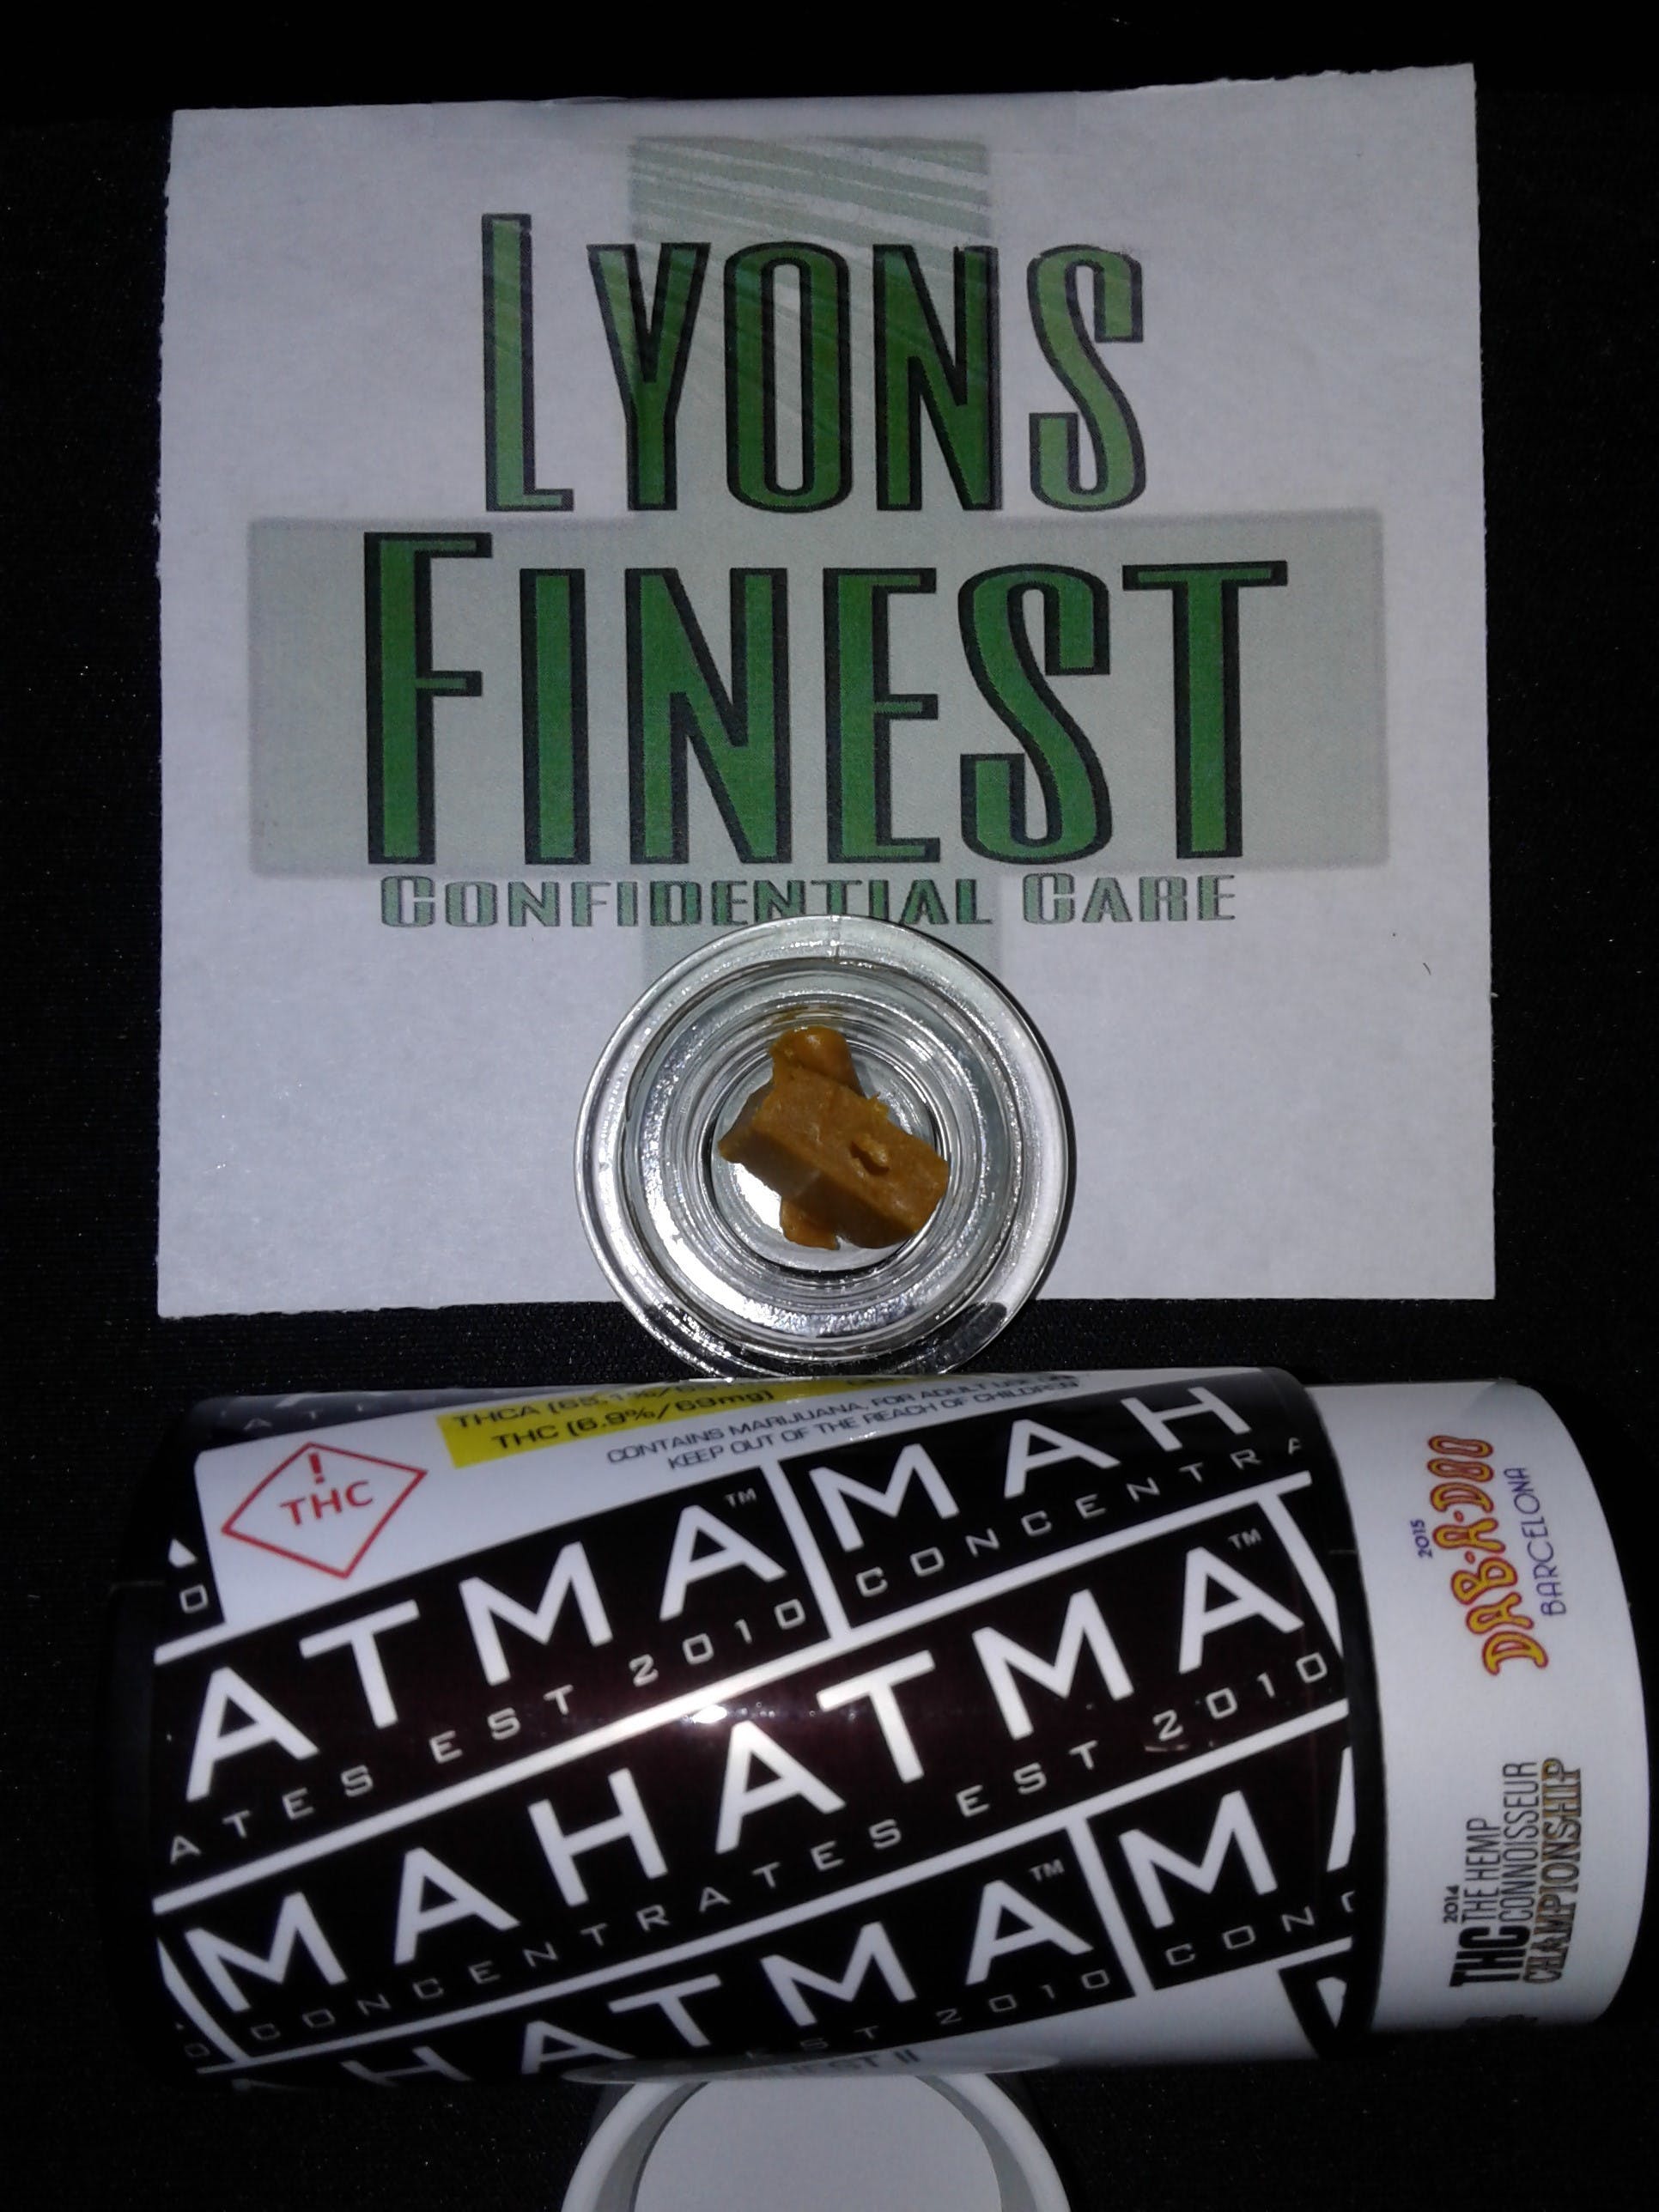 marijuana-dispensaries-lyons-finest-confidential-care-mmc-in-lyons-mahatma-wax